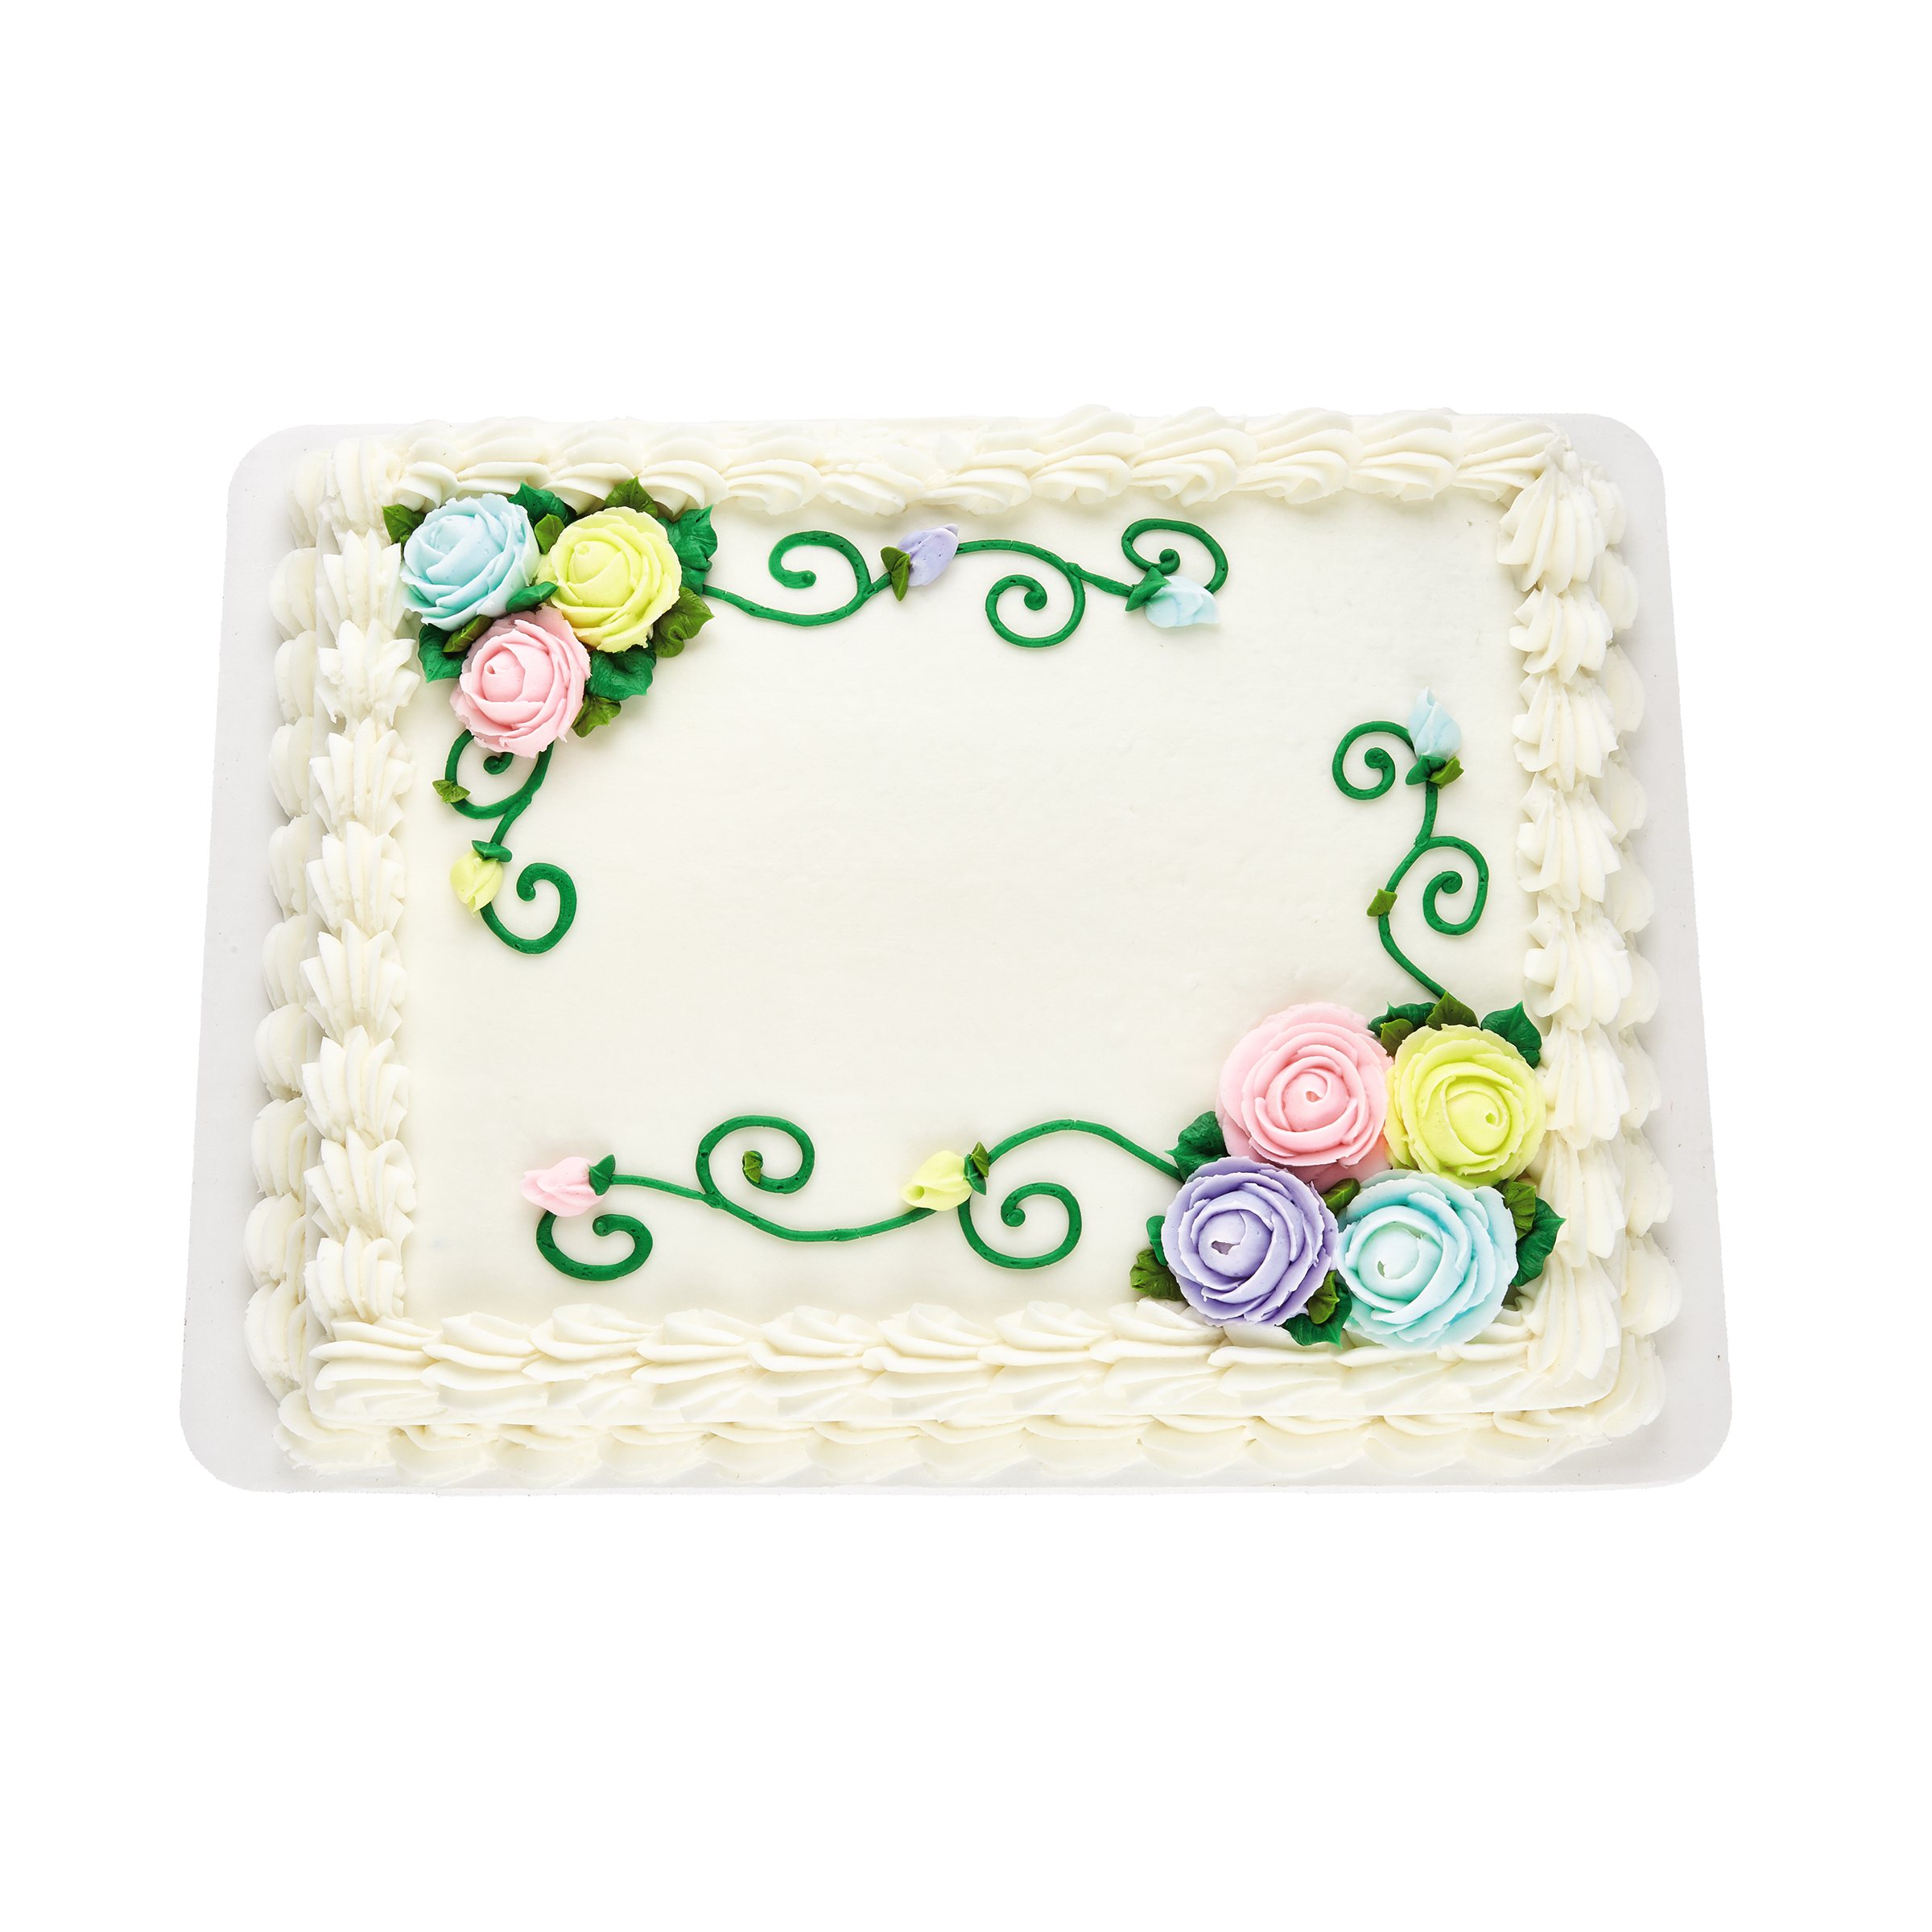 Singer cake | Music cakes, Music themed cakes, Music note birthday cake